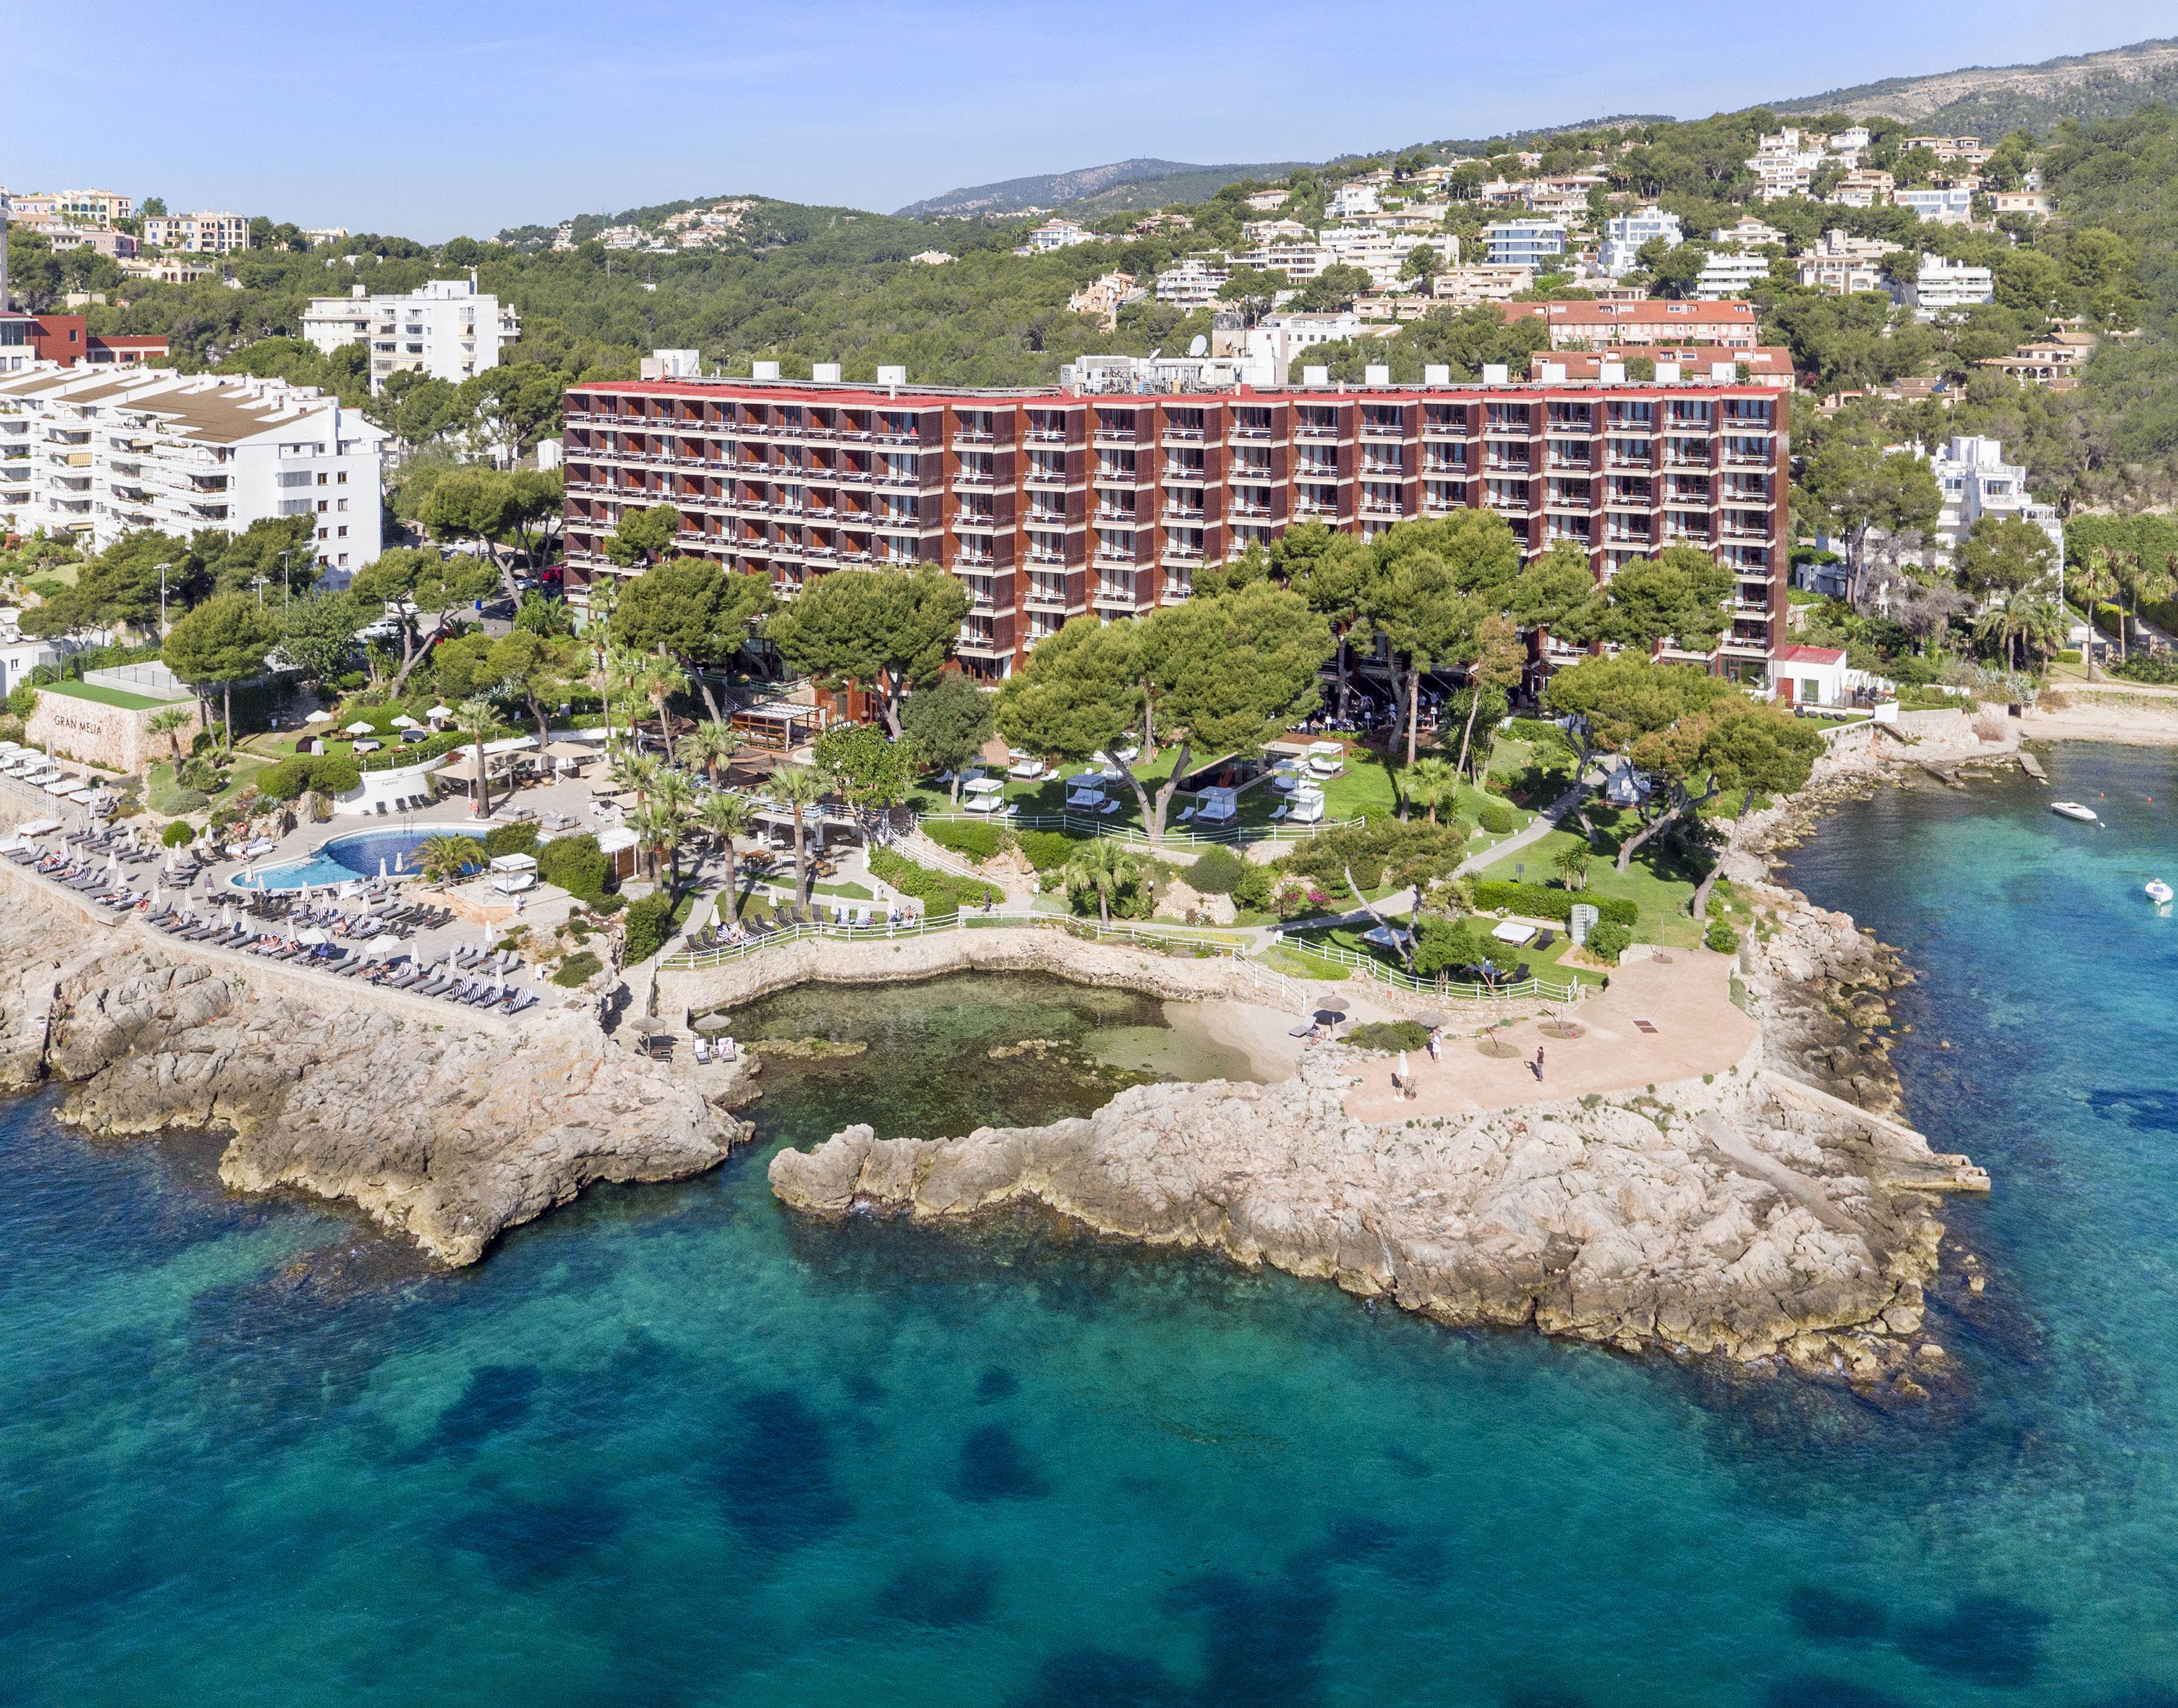 5 Star hotels information in the world: 5 Star Hotel Illetas Mallorca